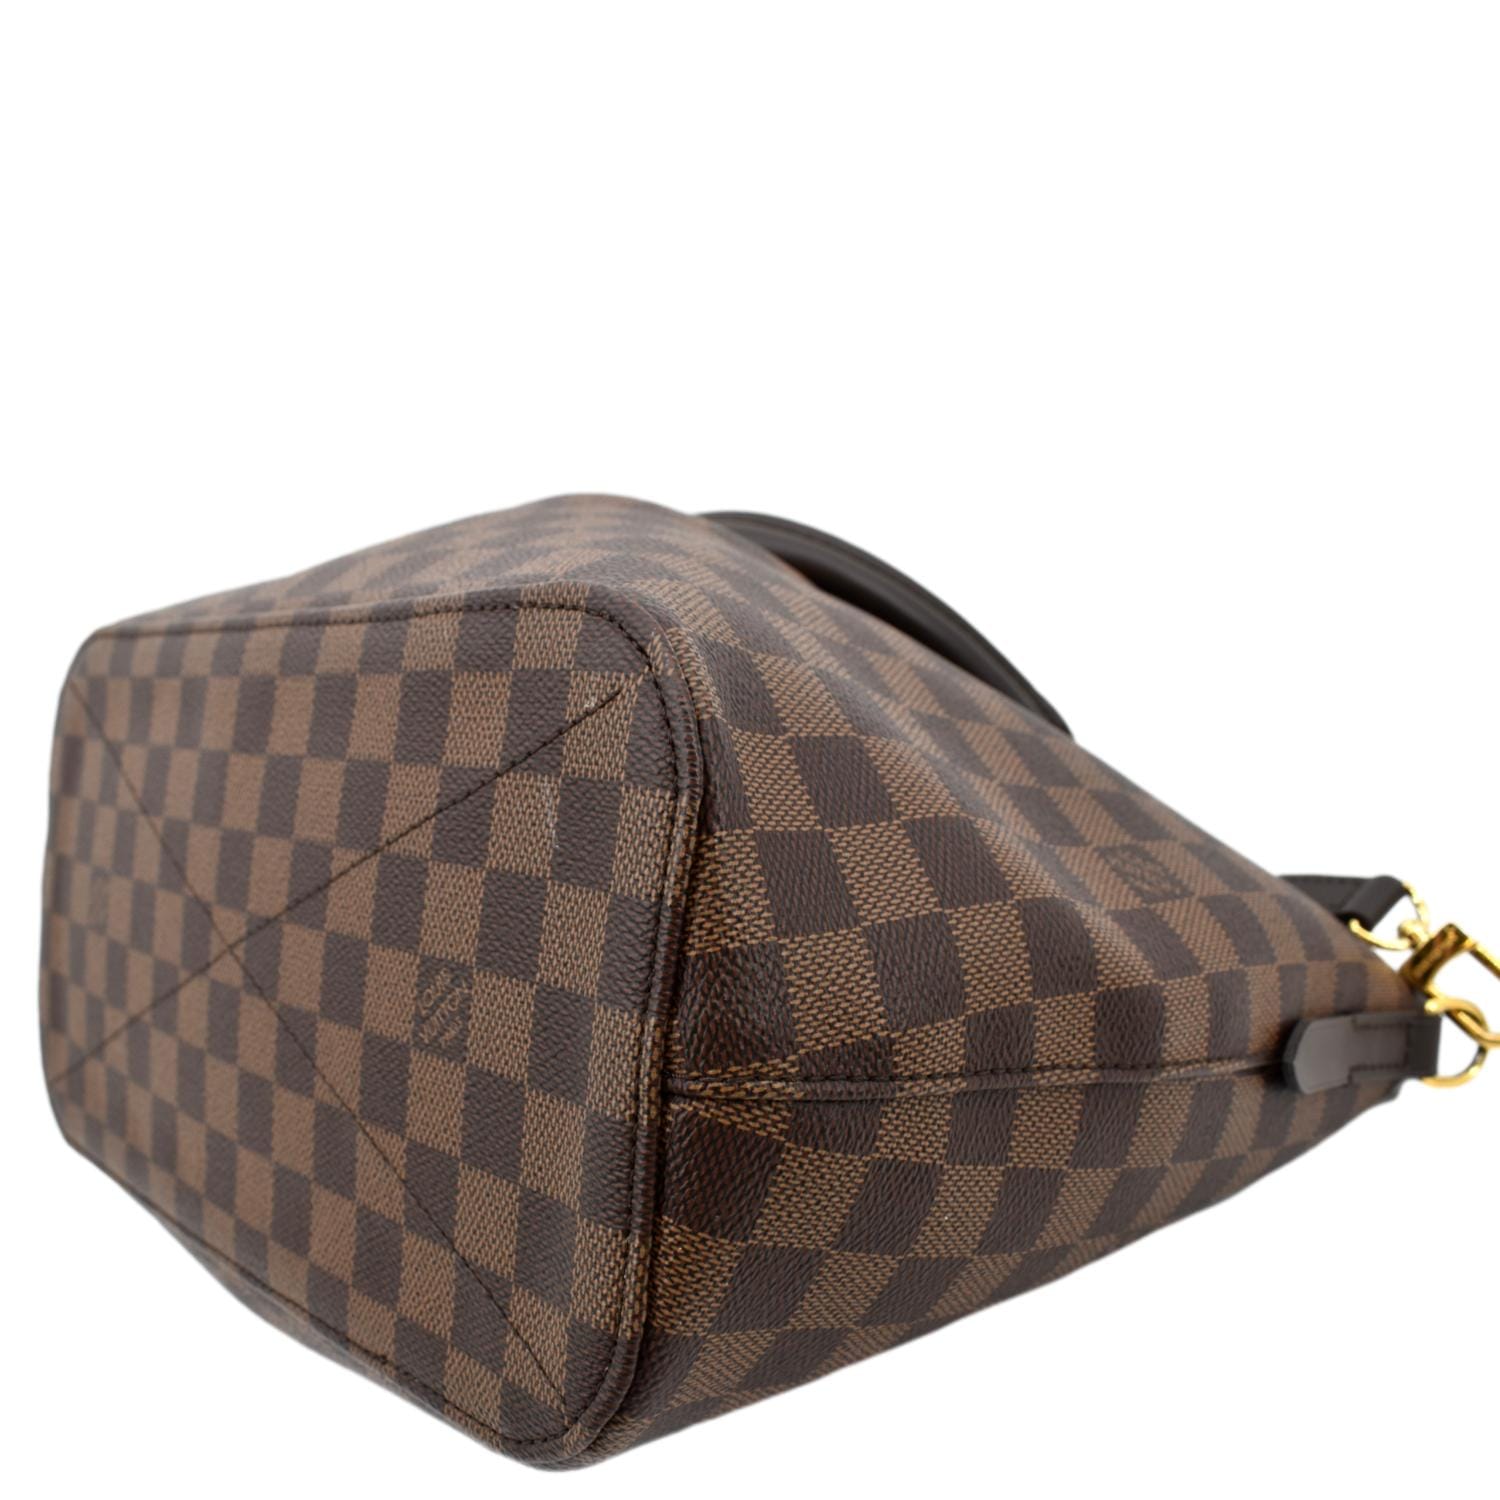 Louis Vuitton, Bags, Louis Vuitton Siena Pm Bag